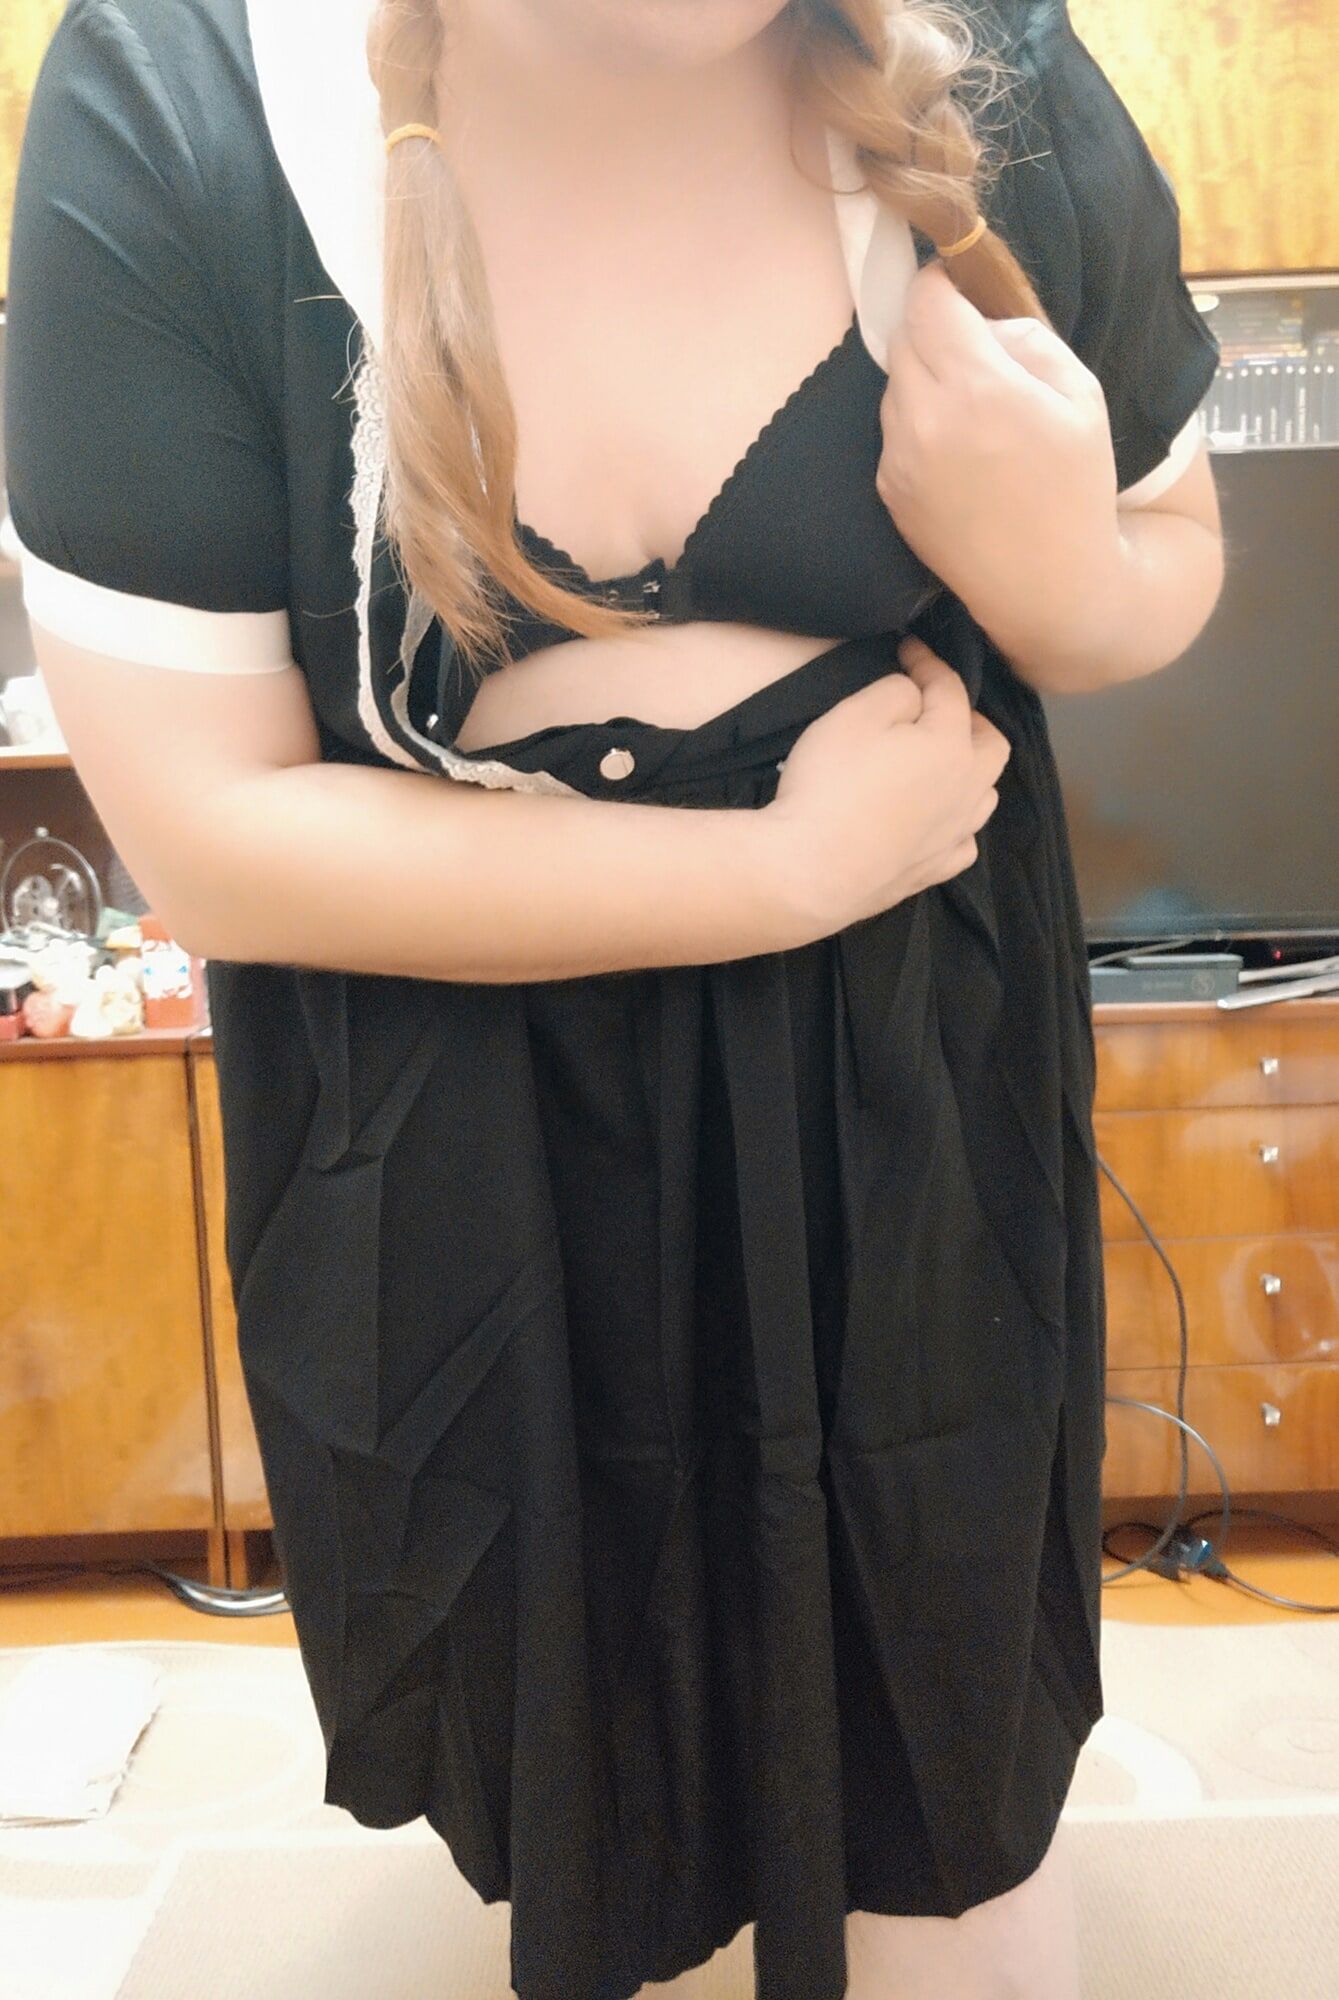 sissy Aleksa posing in new black dress #17